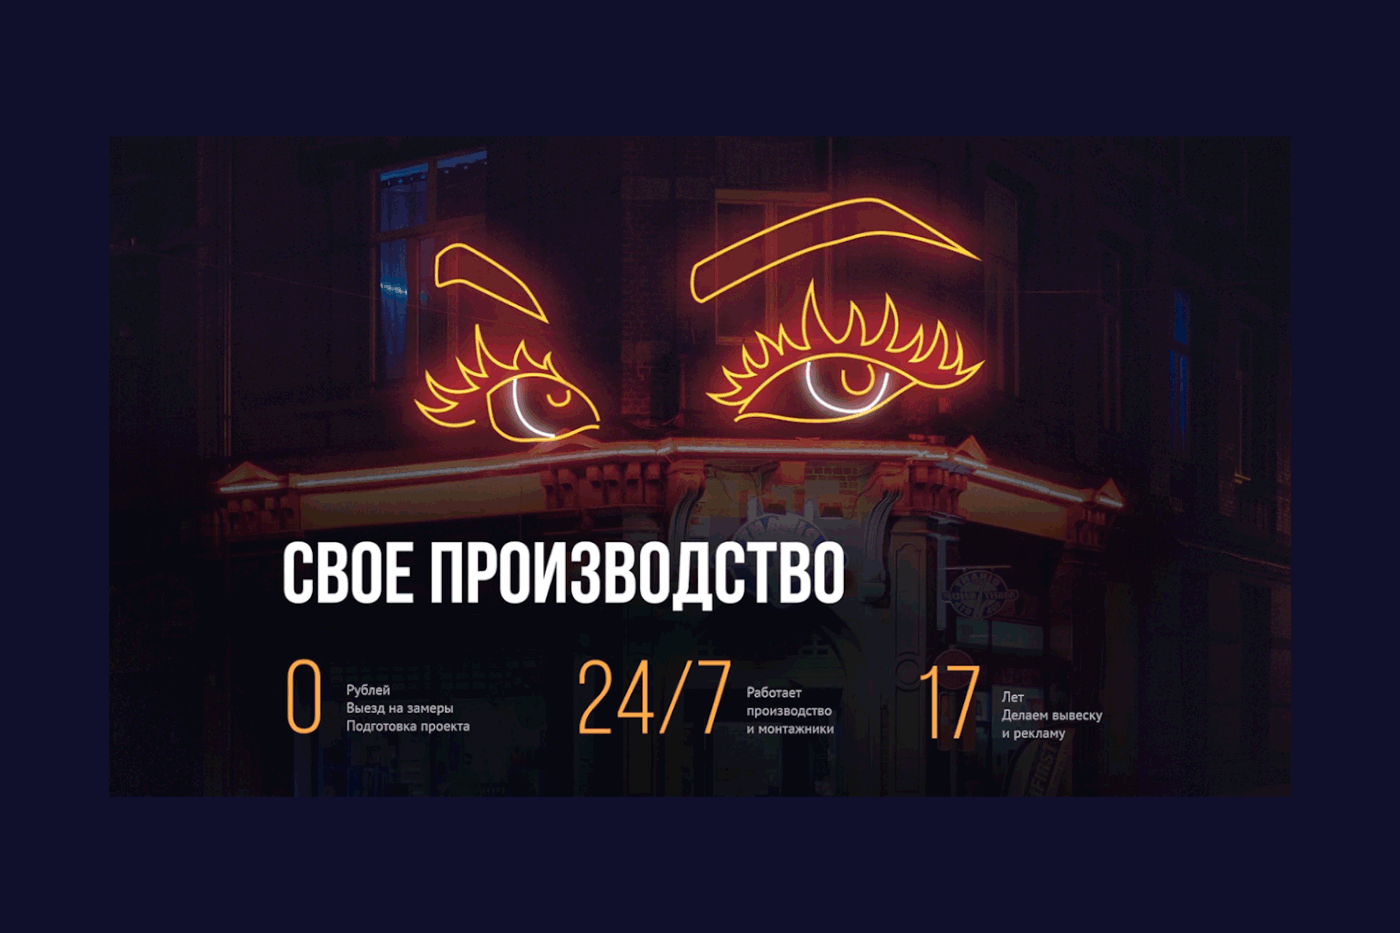 neon signs signs neon light Cyberpunk retrowave ретровейв 80s outdoor advertising Вывески